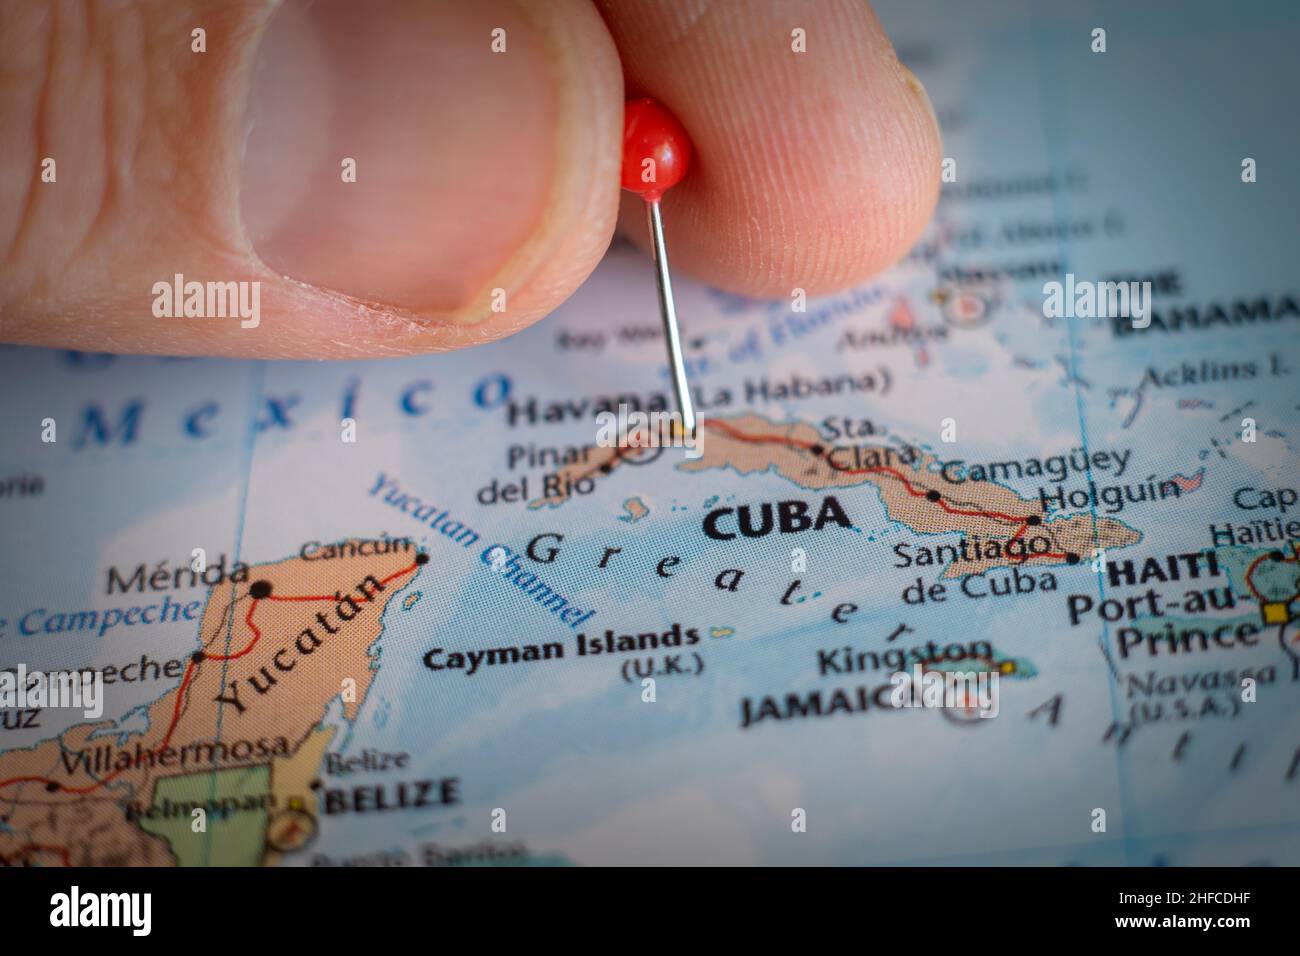 Cuba pin on a world map. Cuba travel destination planning pinned Stock Photo